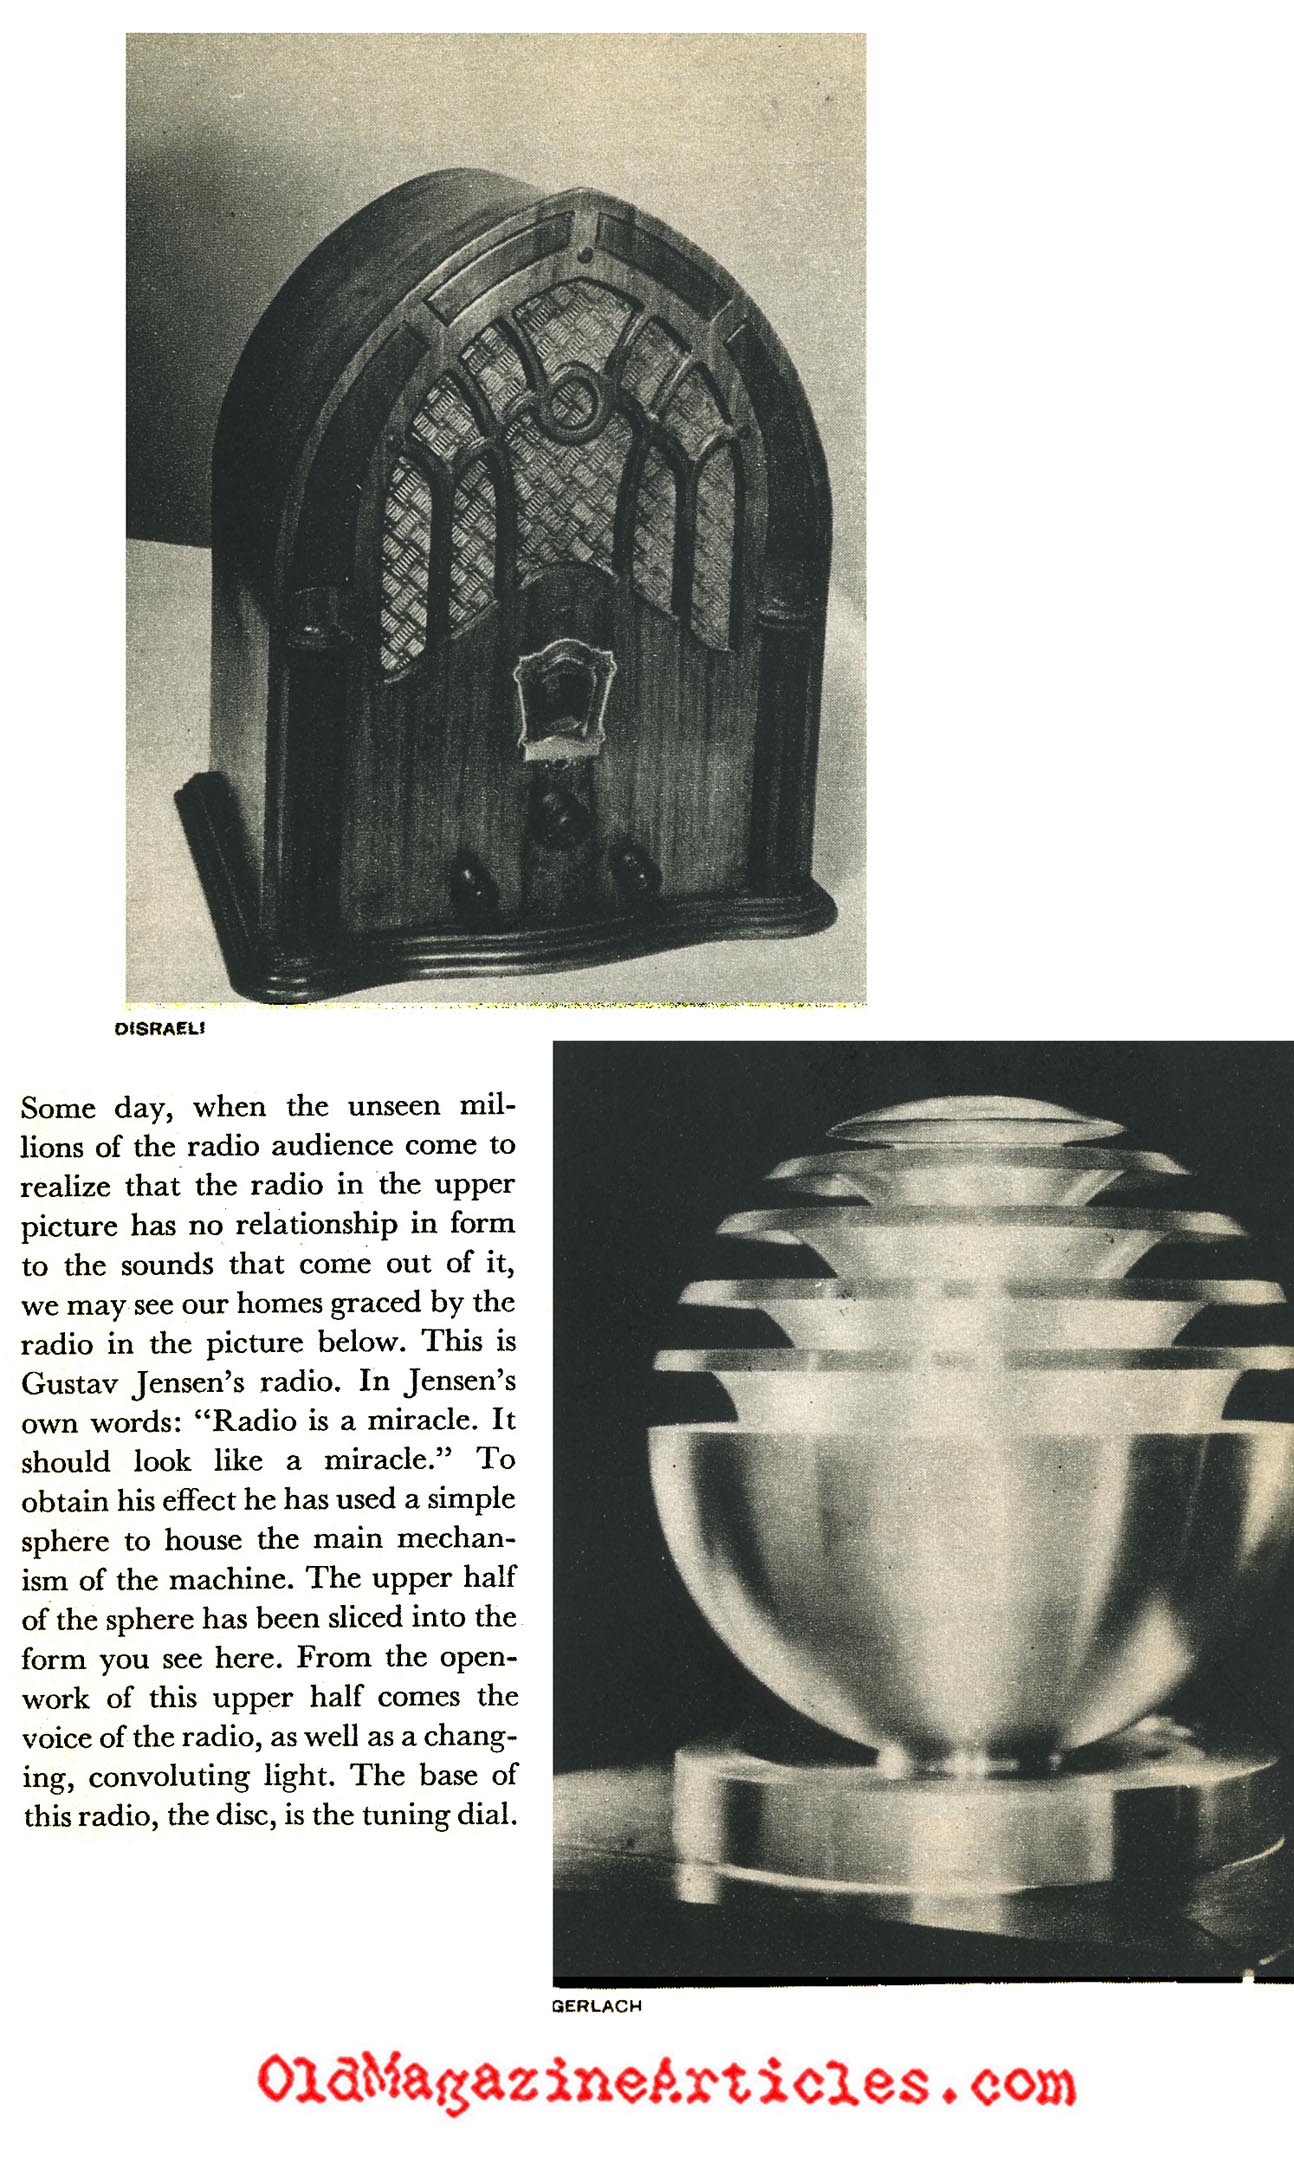 The Designs of Gustav Jensen (Coronet Magazine, 1940)